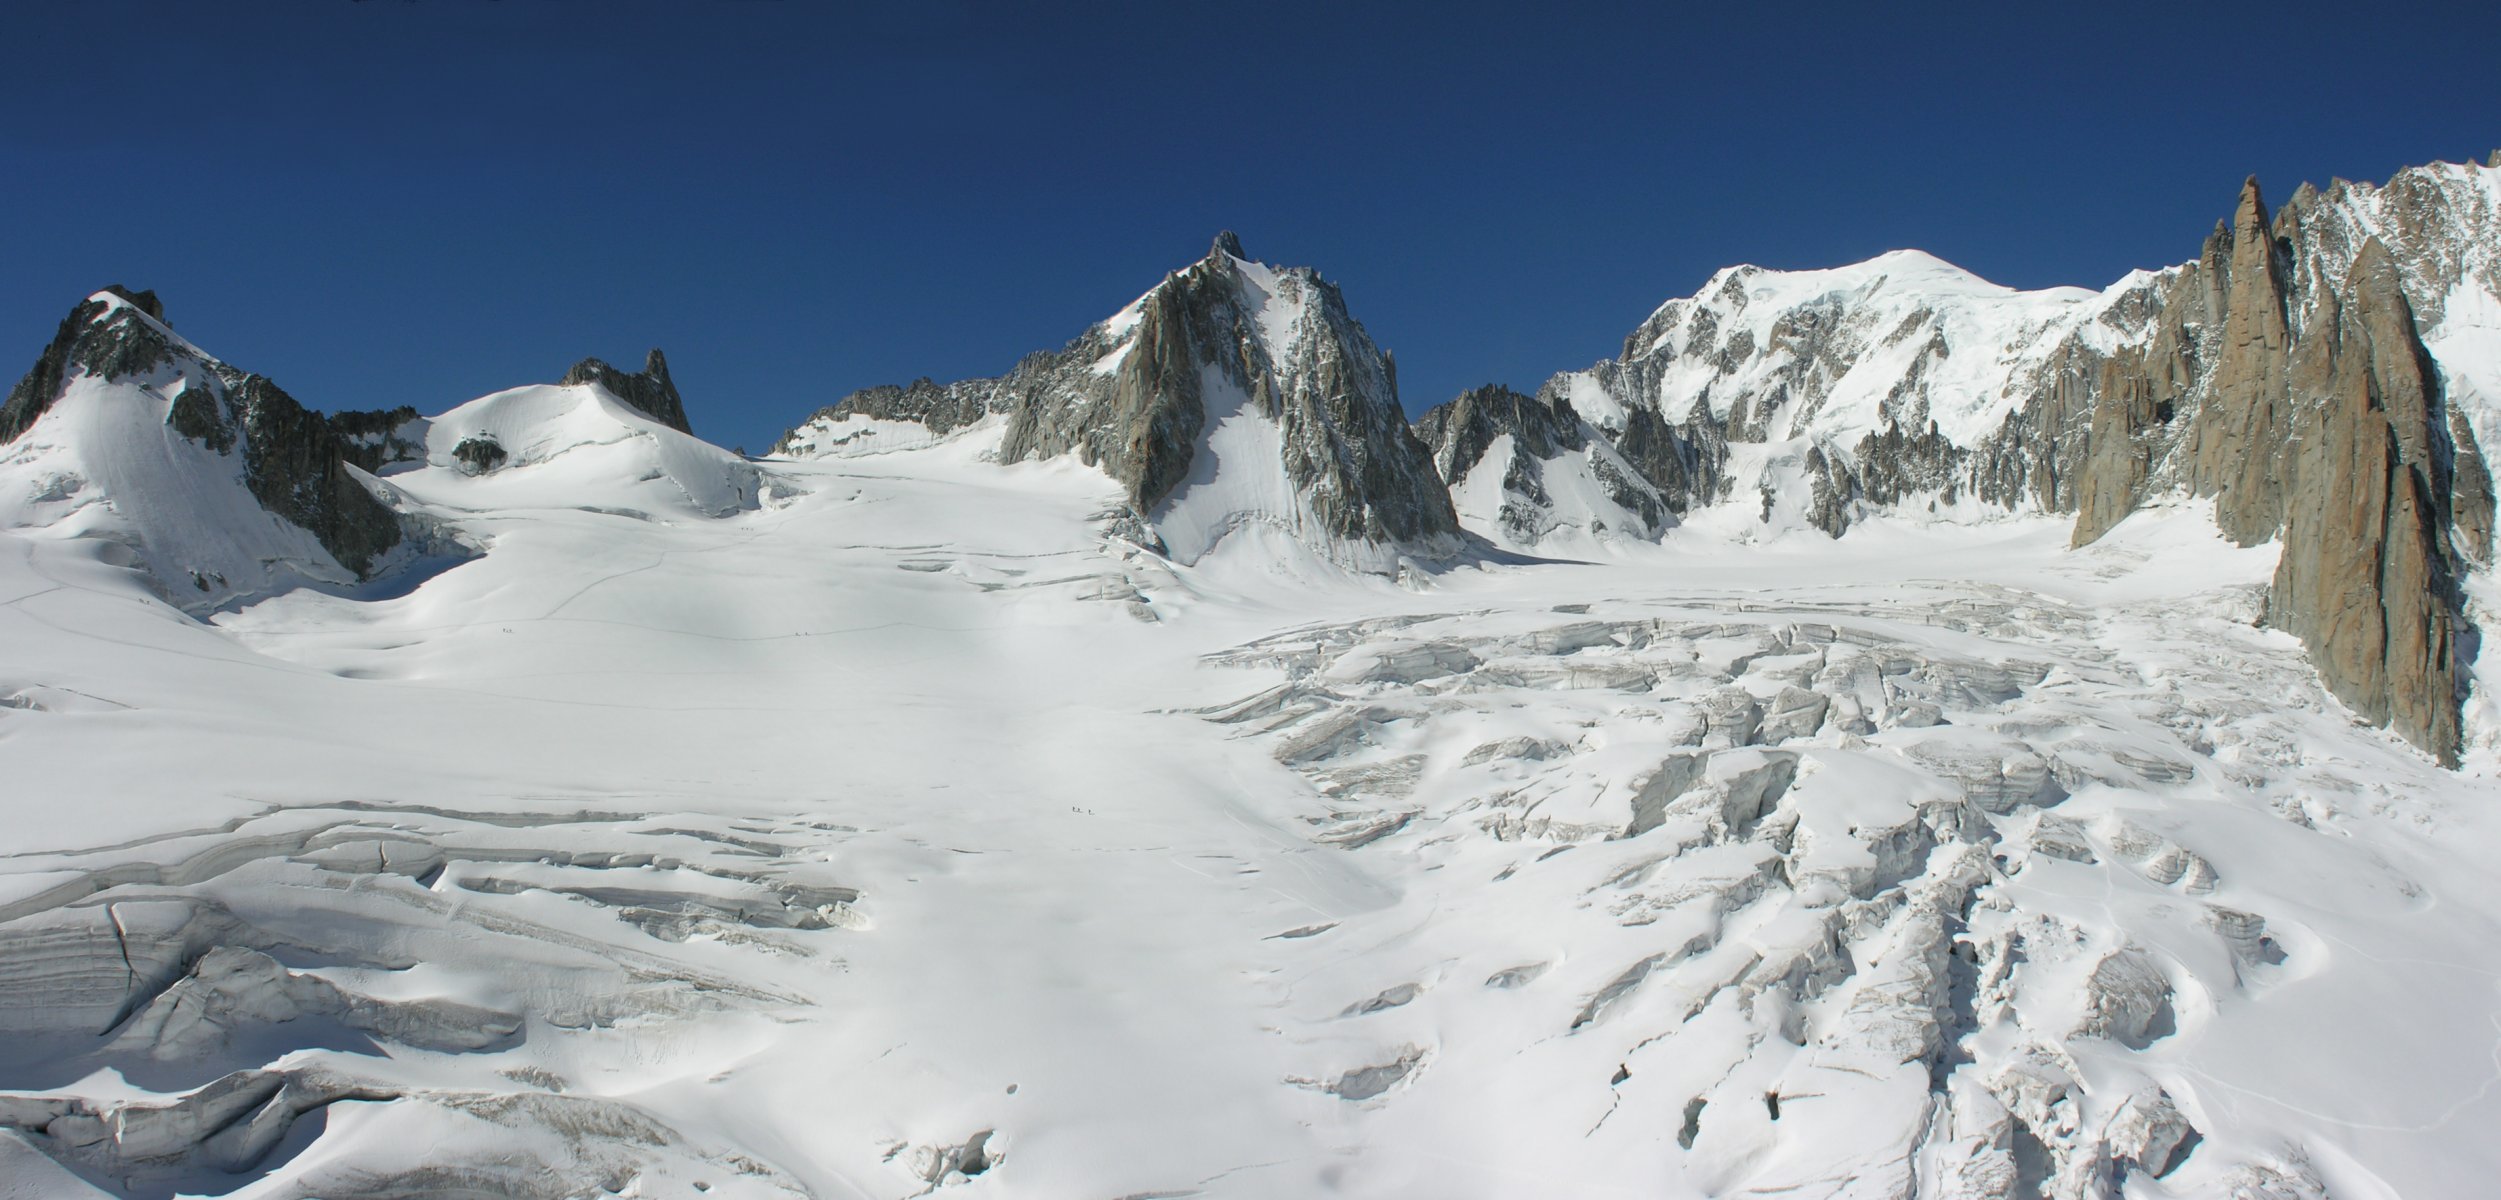 Glacier du Geant - Mont Blanc massif - France.jpg